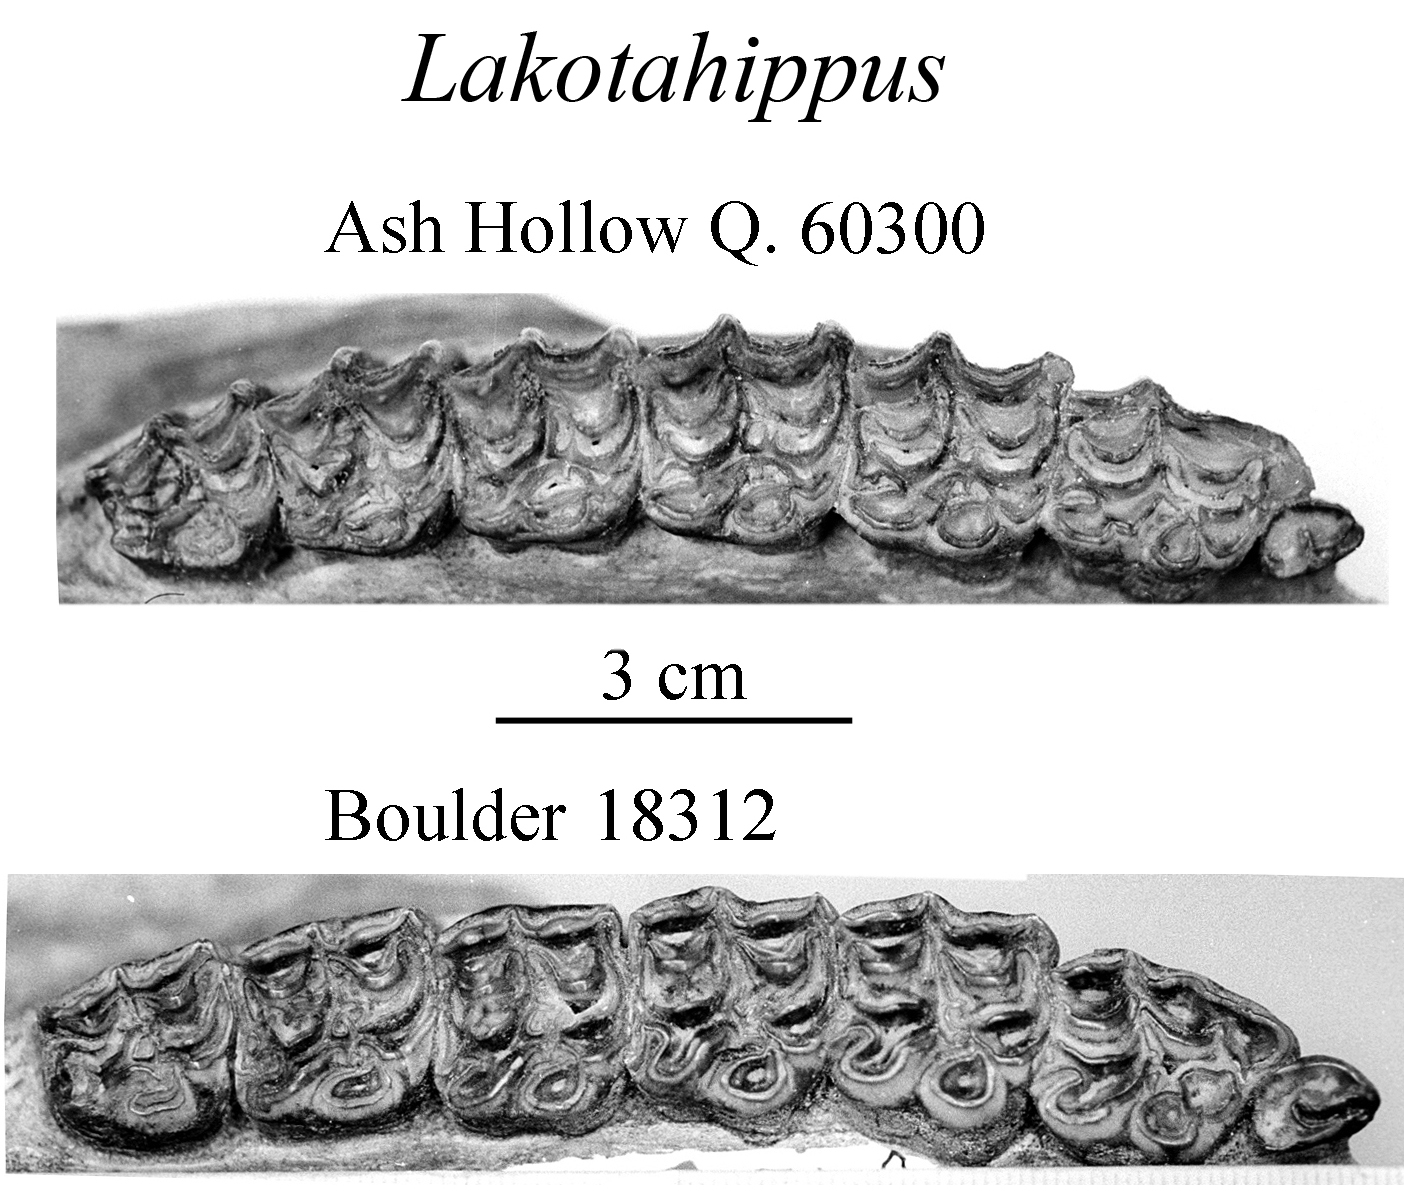 Lakotahippus upper cheek teeth